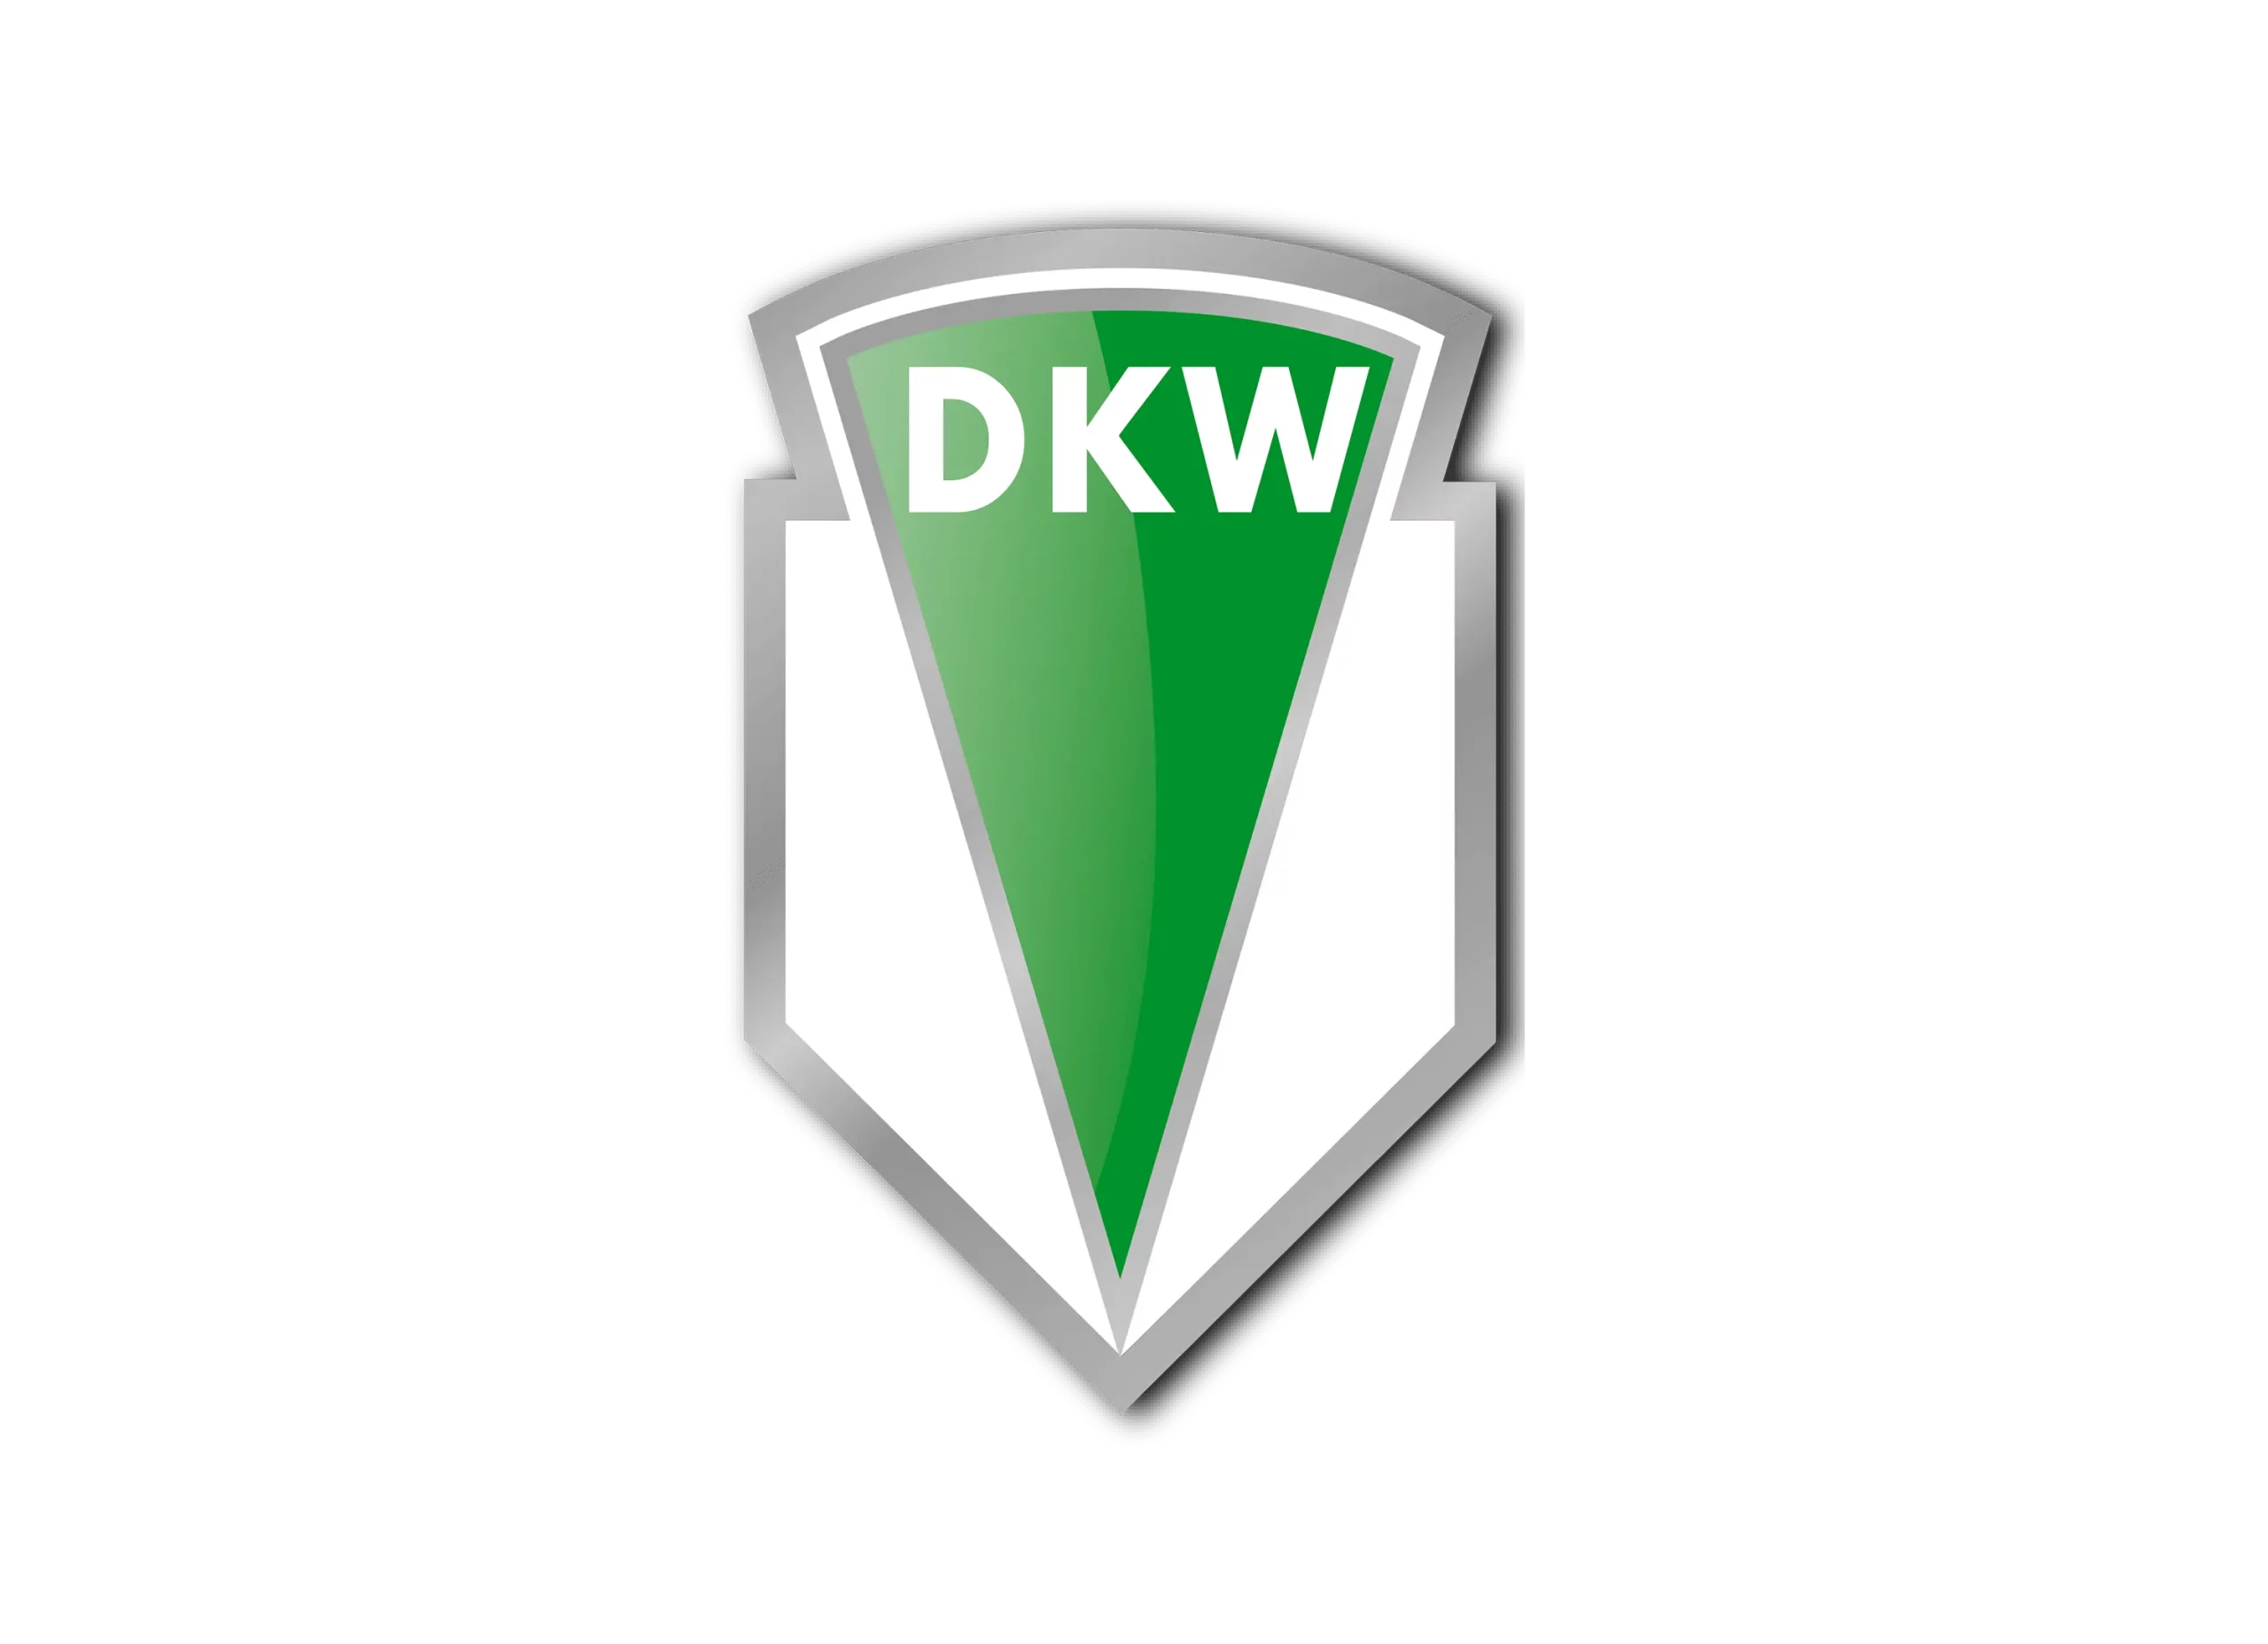 DKW logo 1923-1932